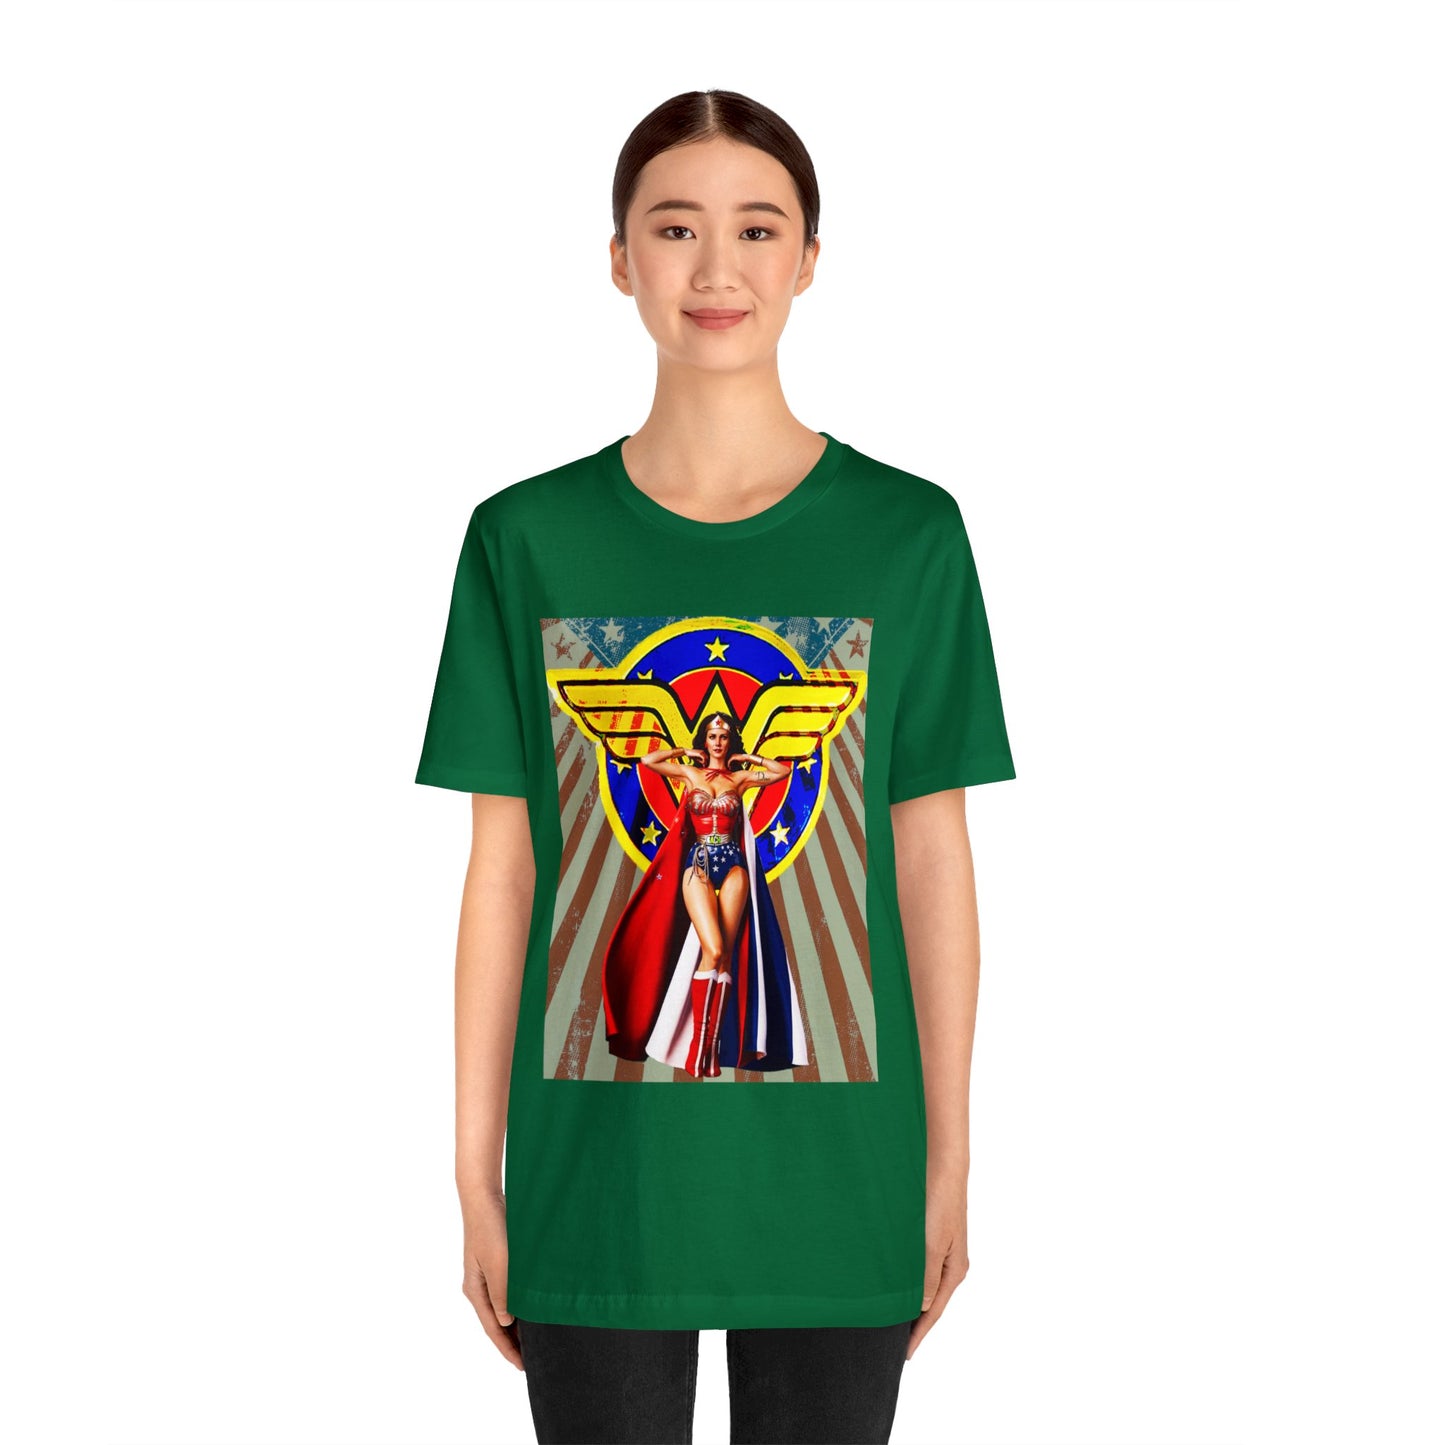 Unisex T-Shirt Wonder Woman